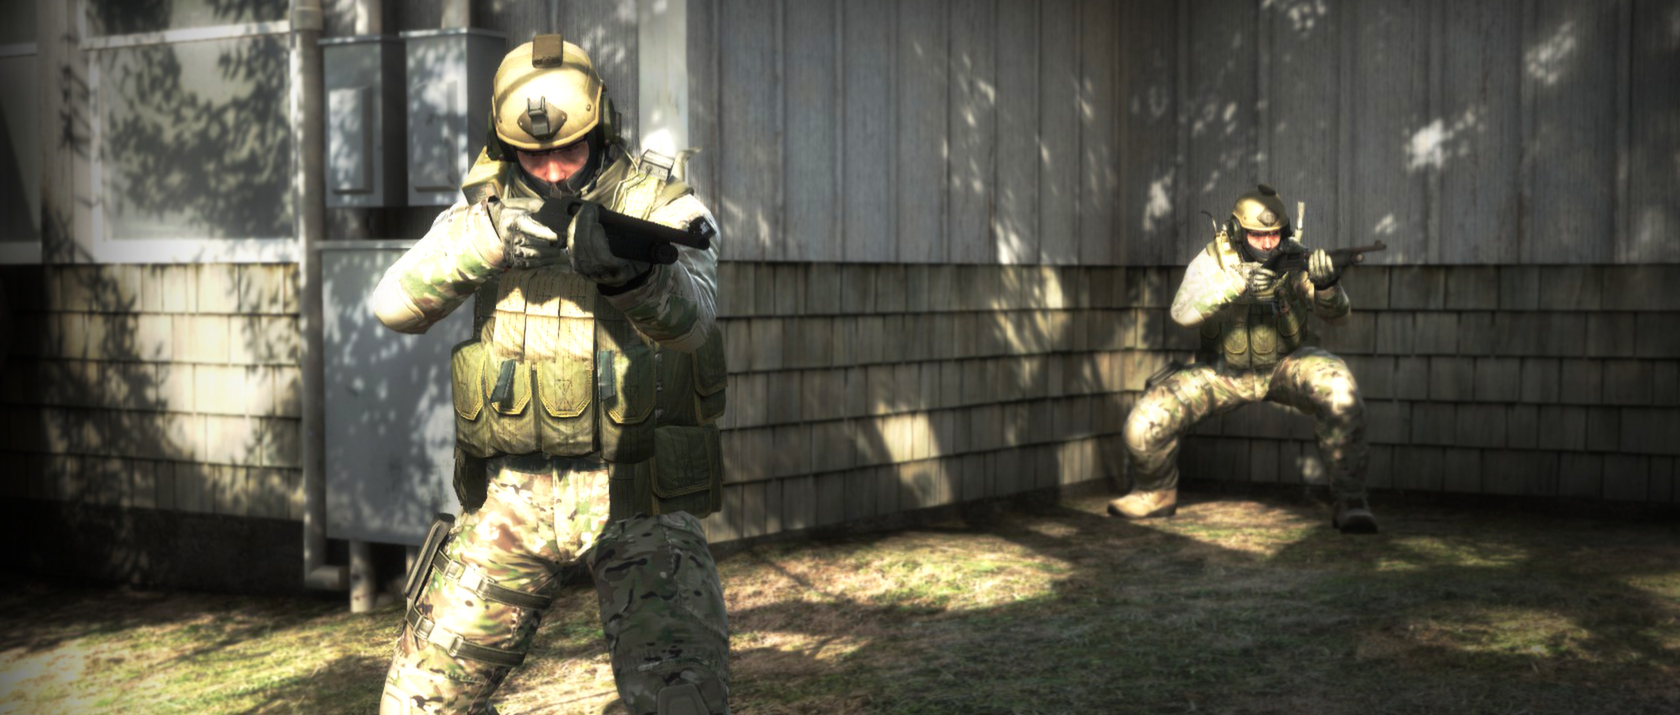 Скриншот 3 к игре Counter-Strike: Global Offensive (CS: GO)